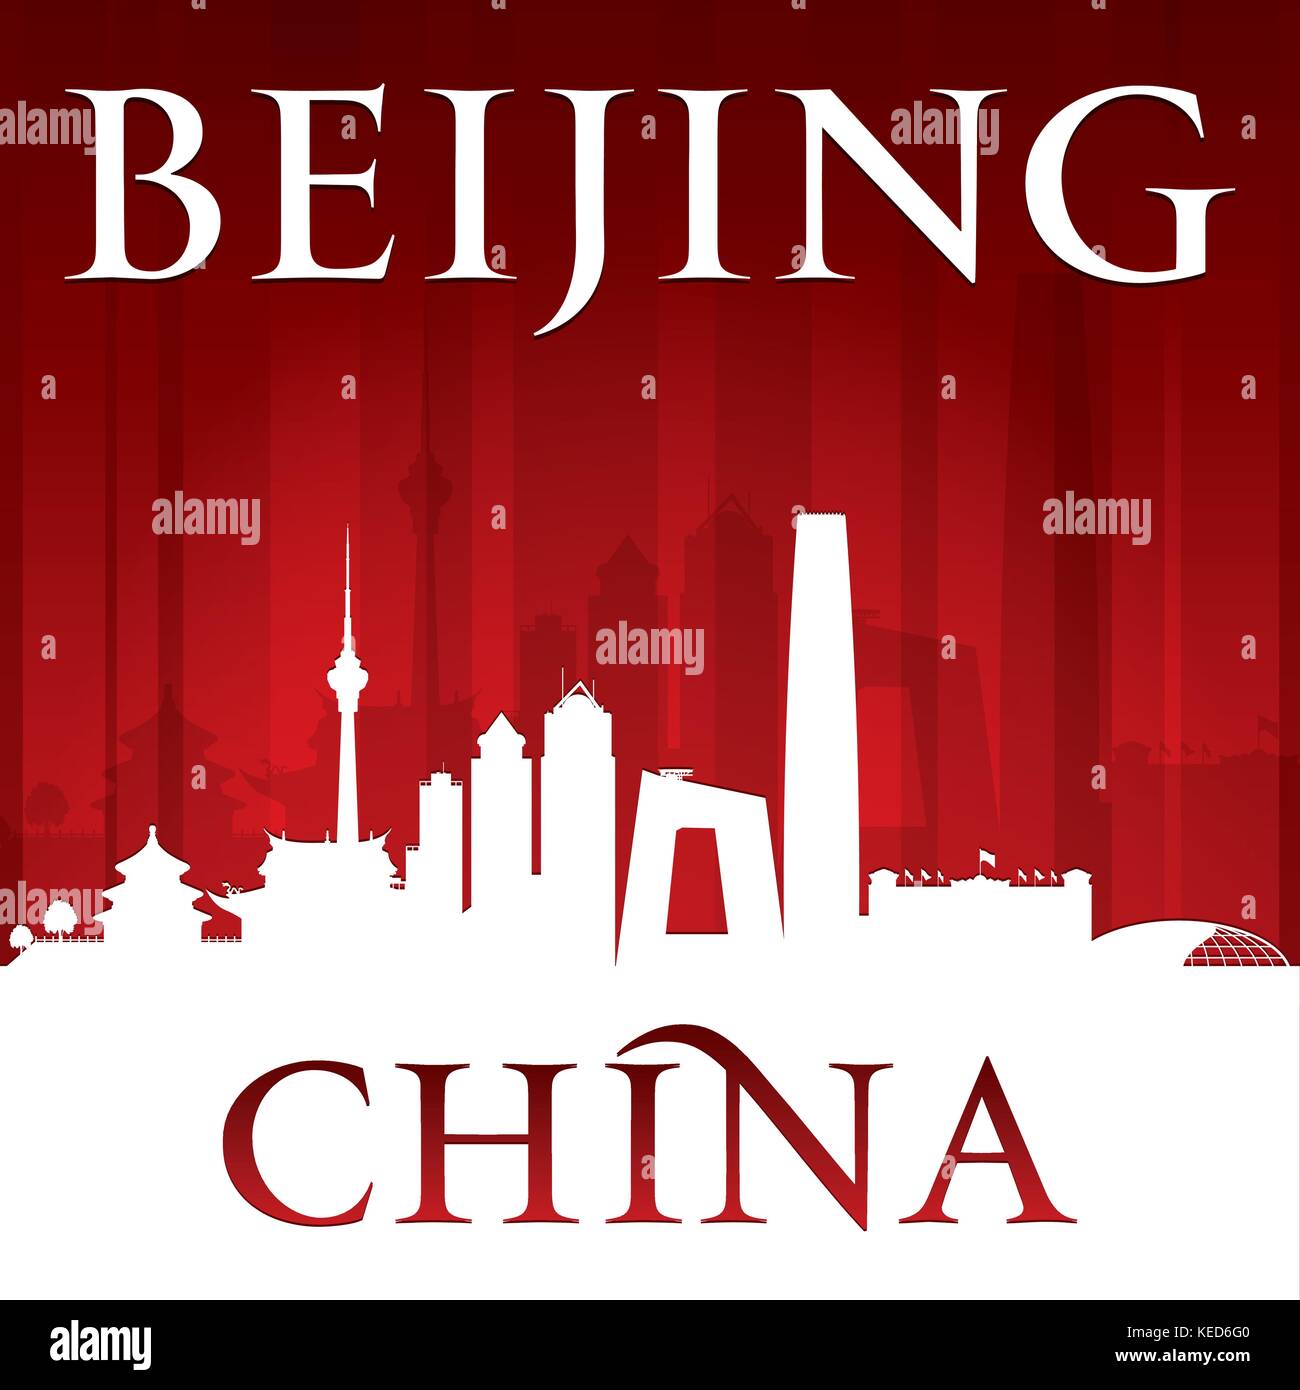 Beijing China city skyline silhouette. Vector illustration Stock Vector